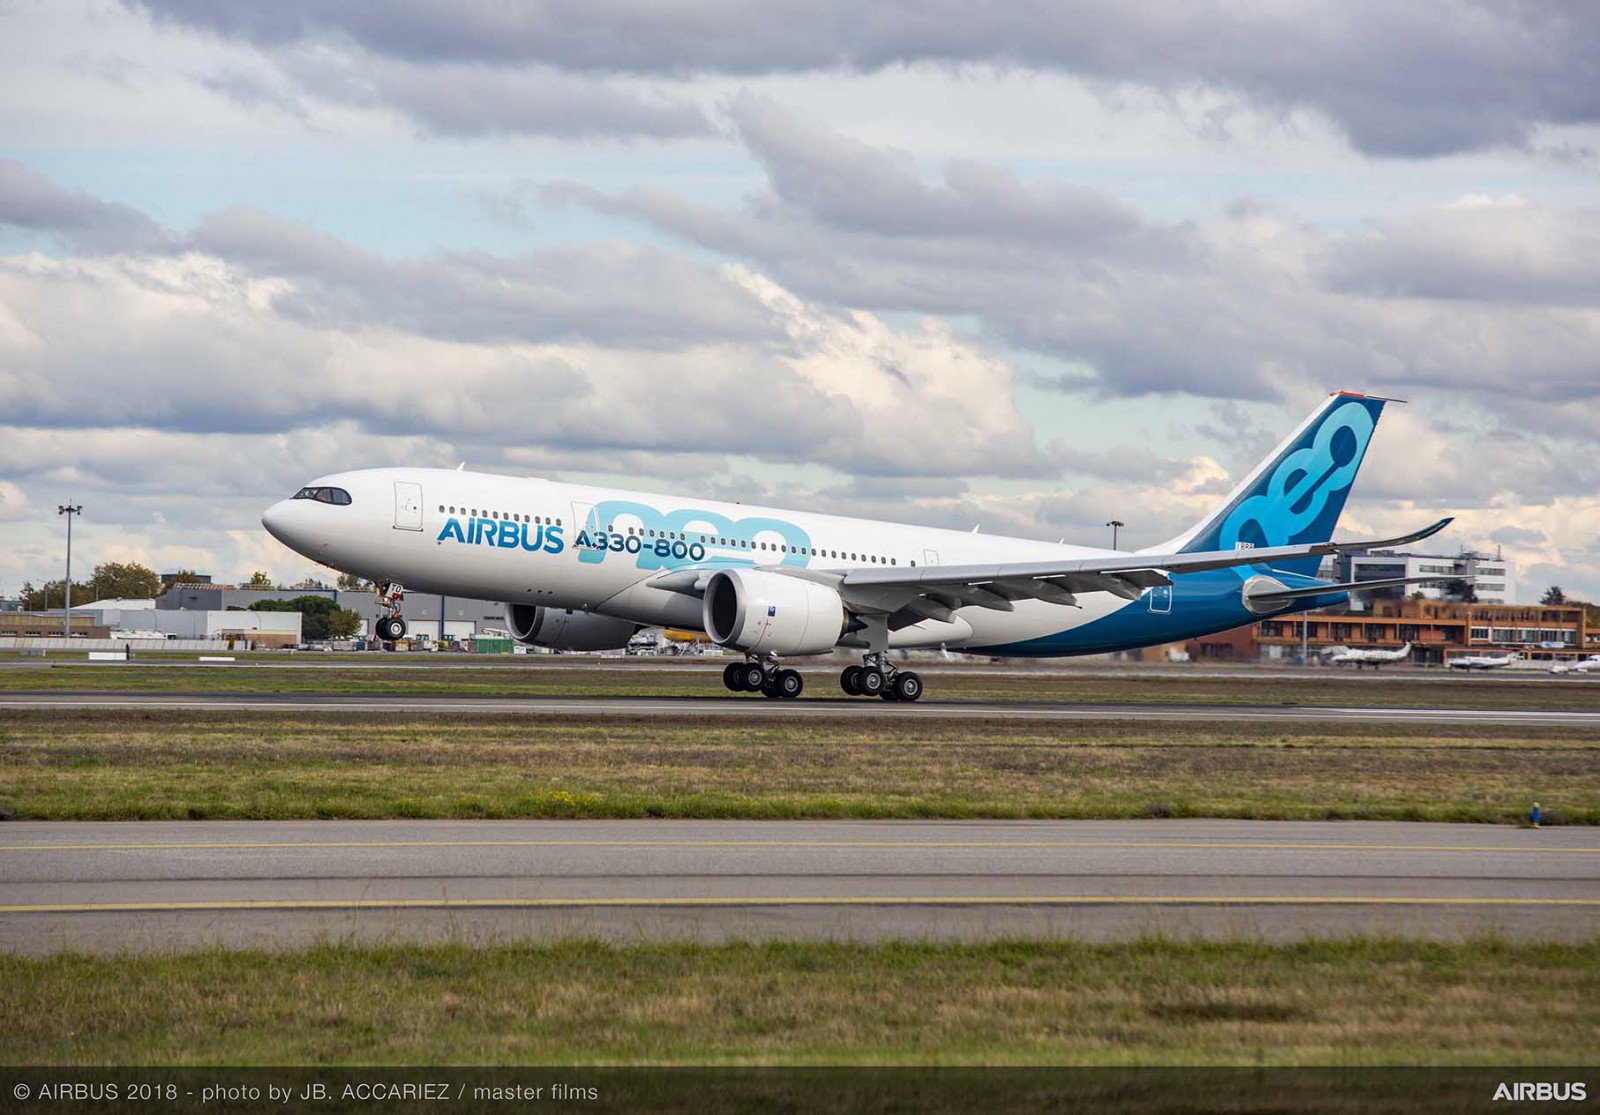 Airbus A330-800